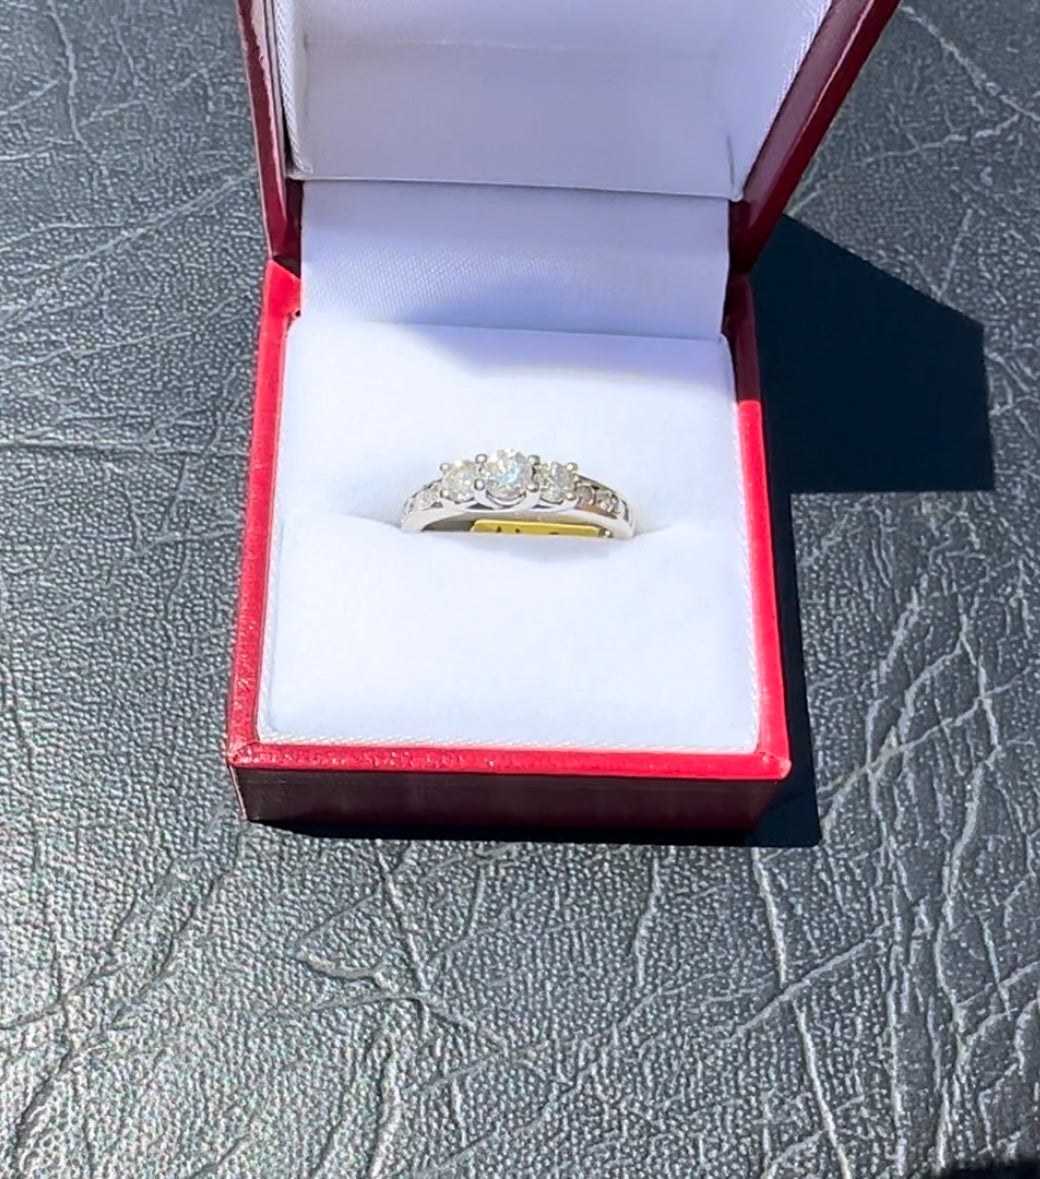 #075 - 10k White Gold, .83ct Diamond Trinity Ring, Size 5 3/4